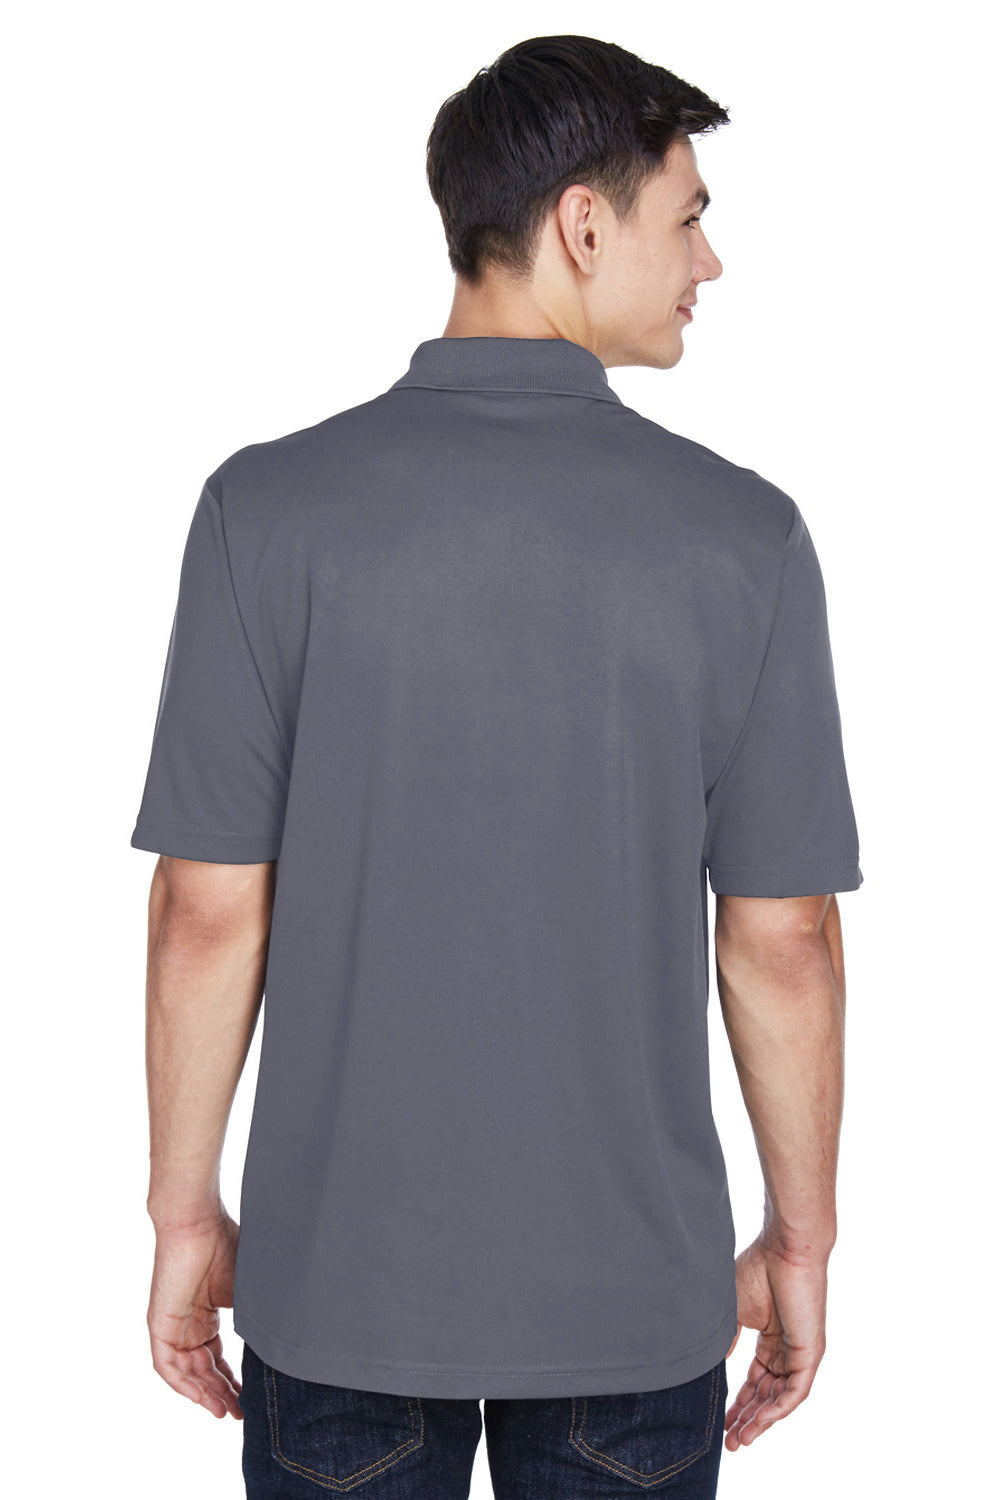 Core 365 CE101 Mens Balance Performance Moisture Wicking Short Sleeve Polo Shirt Black/Grey Back